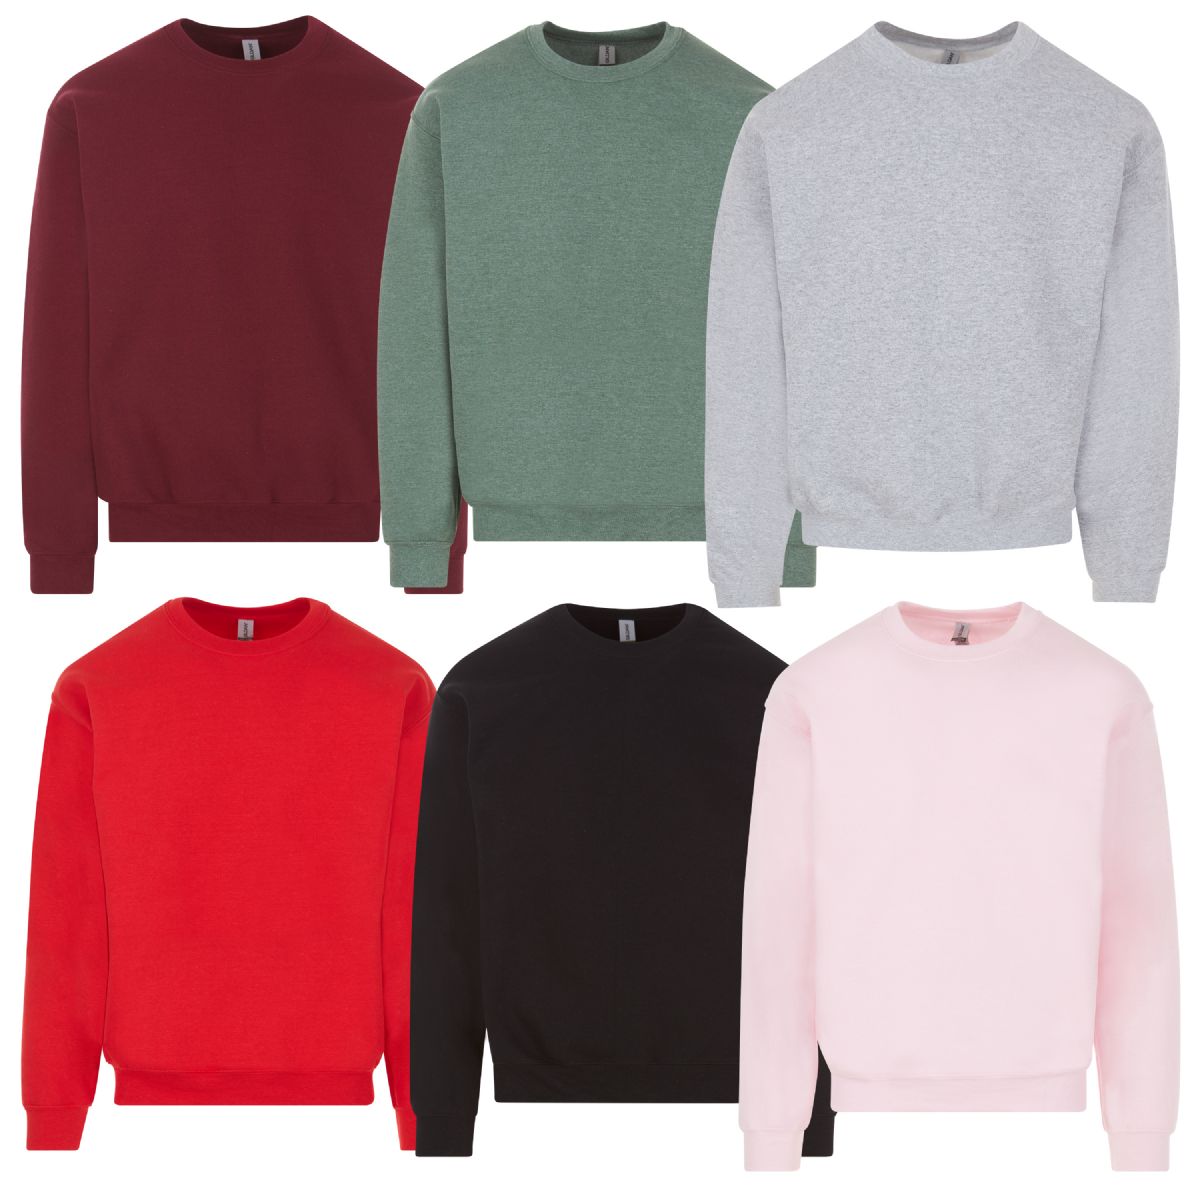 36 Pieces of Gildan Mens Assorted Colors Fleece Sweat Shirts Size Small